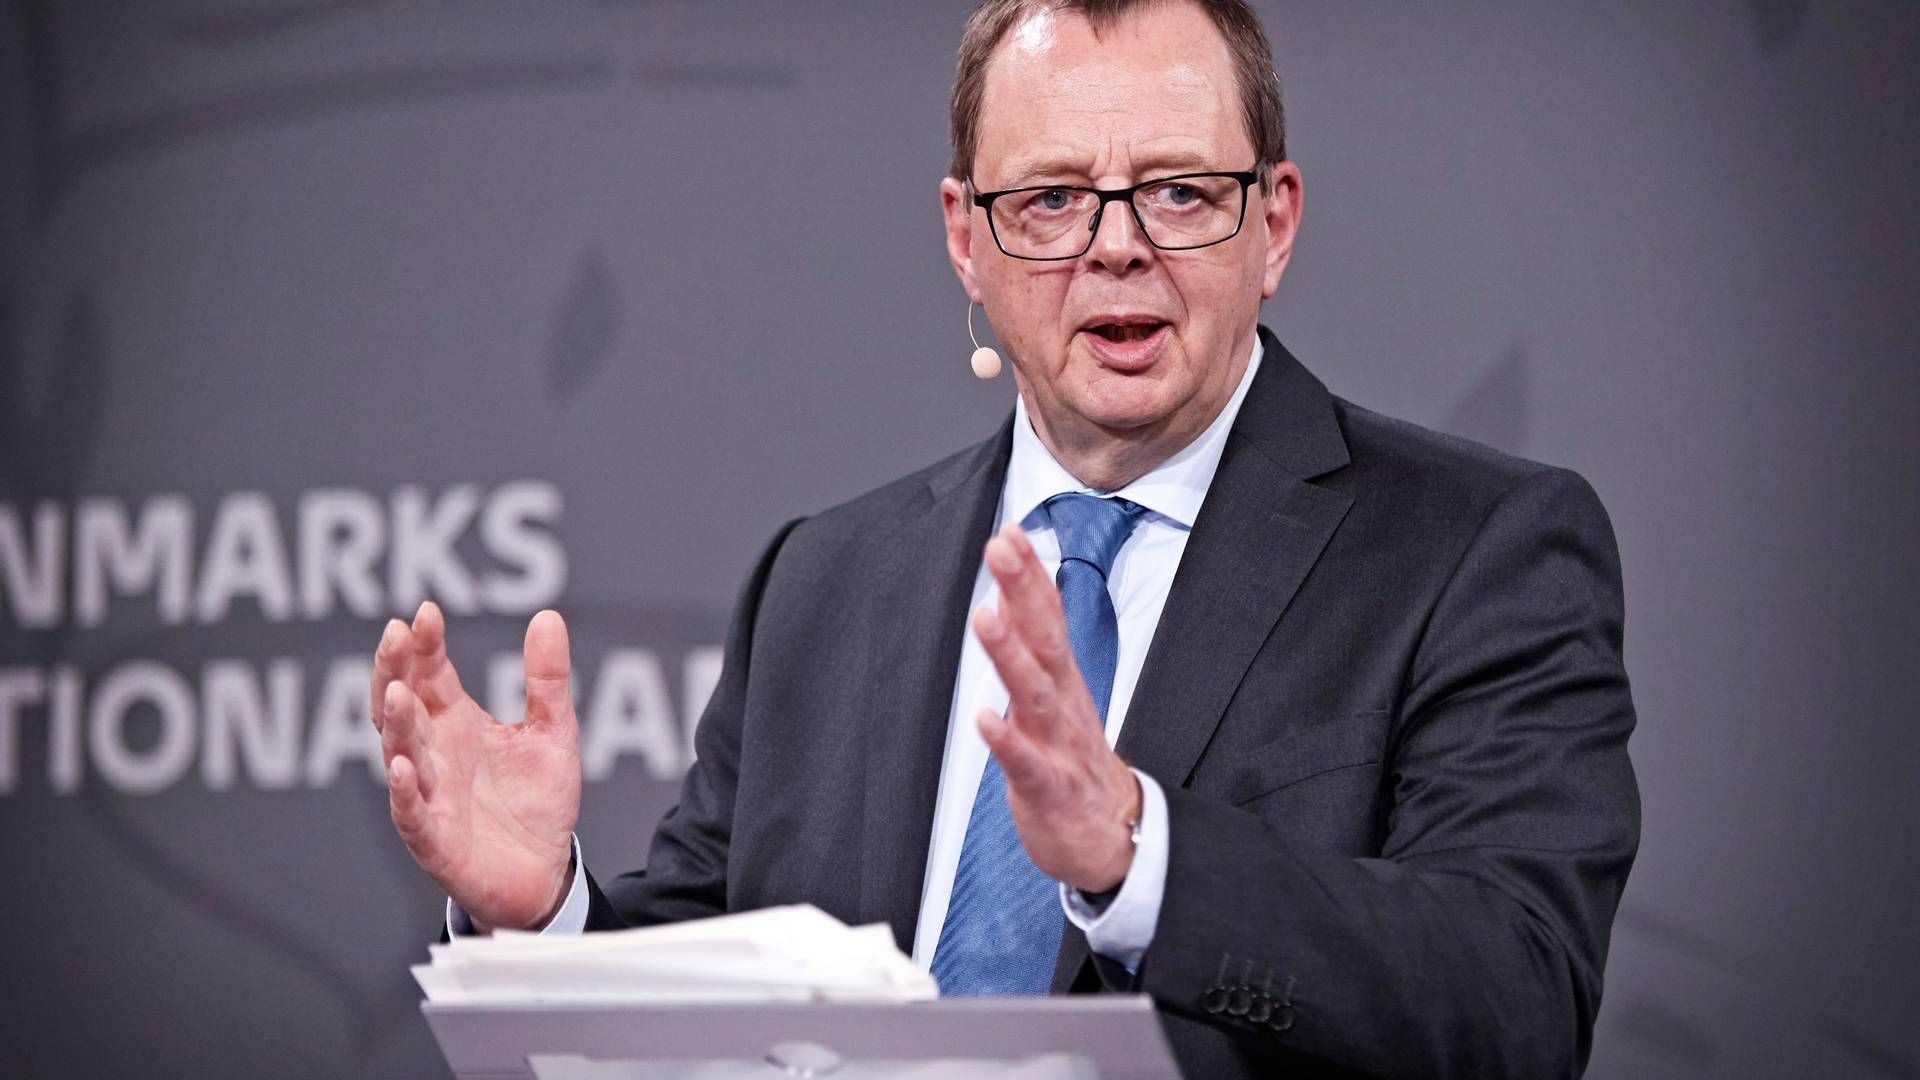 Nationalbankdirektør Christian Kettel Thomsen præsenterer onsdag en prognose for dansk økonomi. | Foto: Jens Dresling